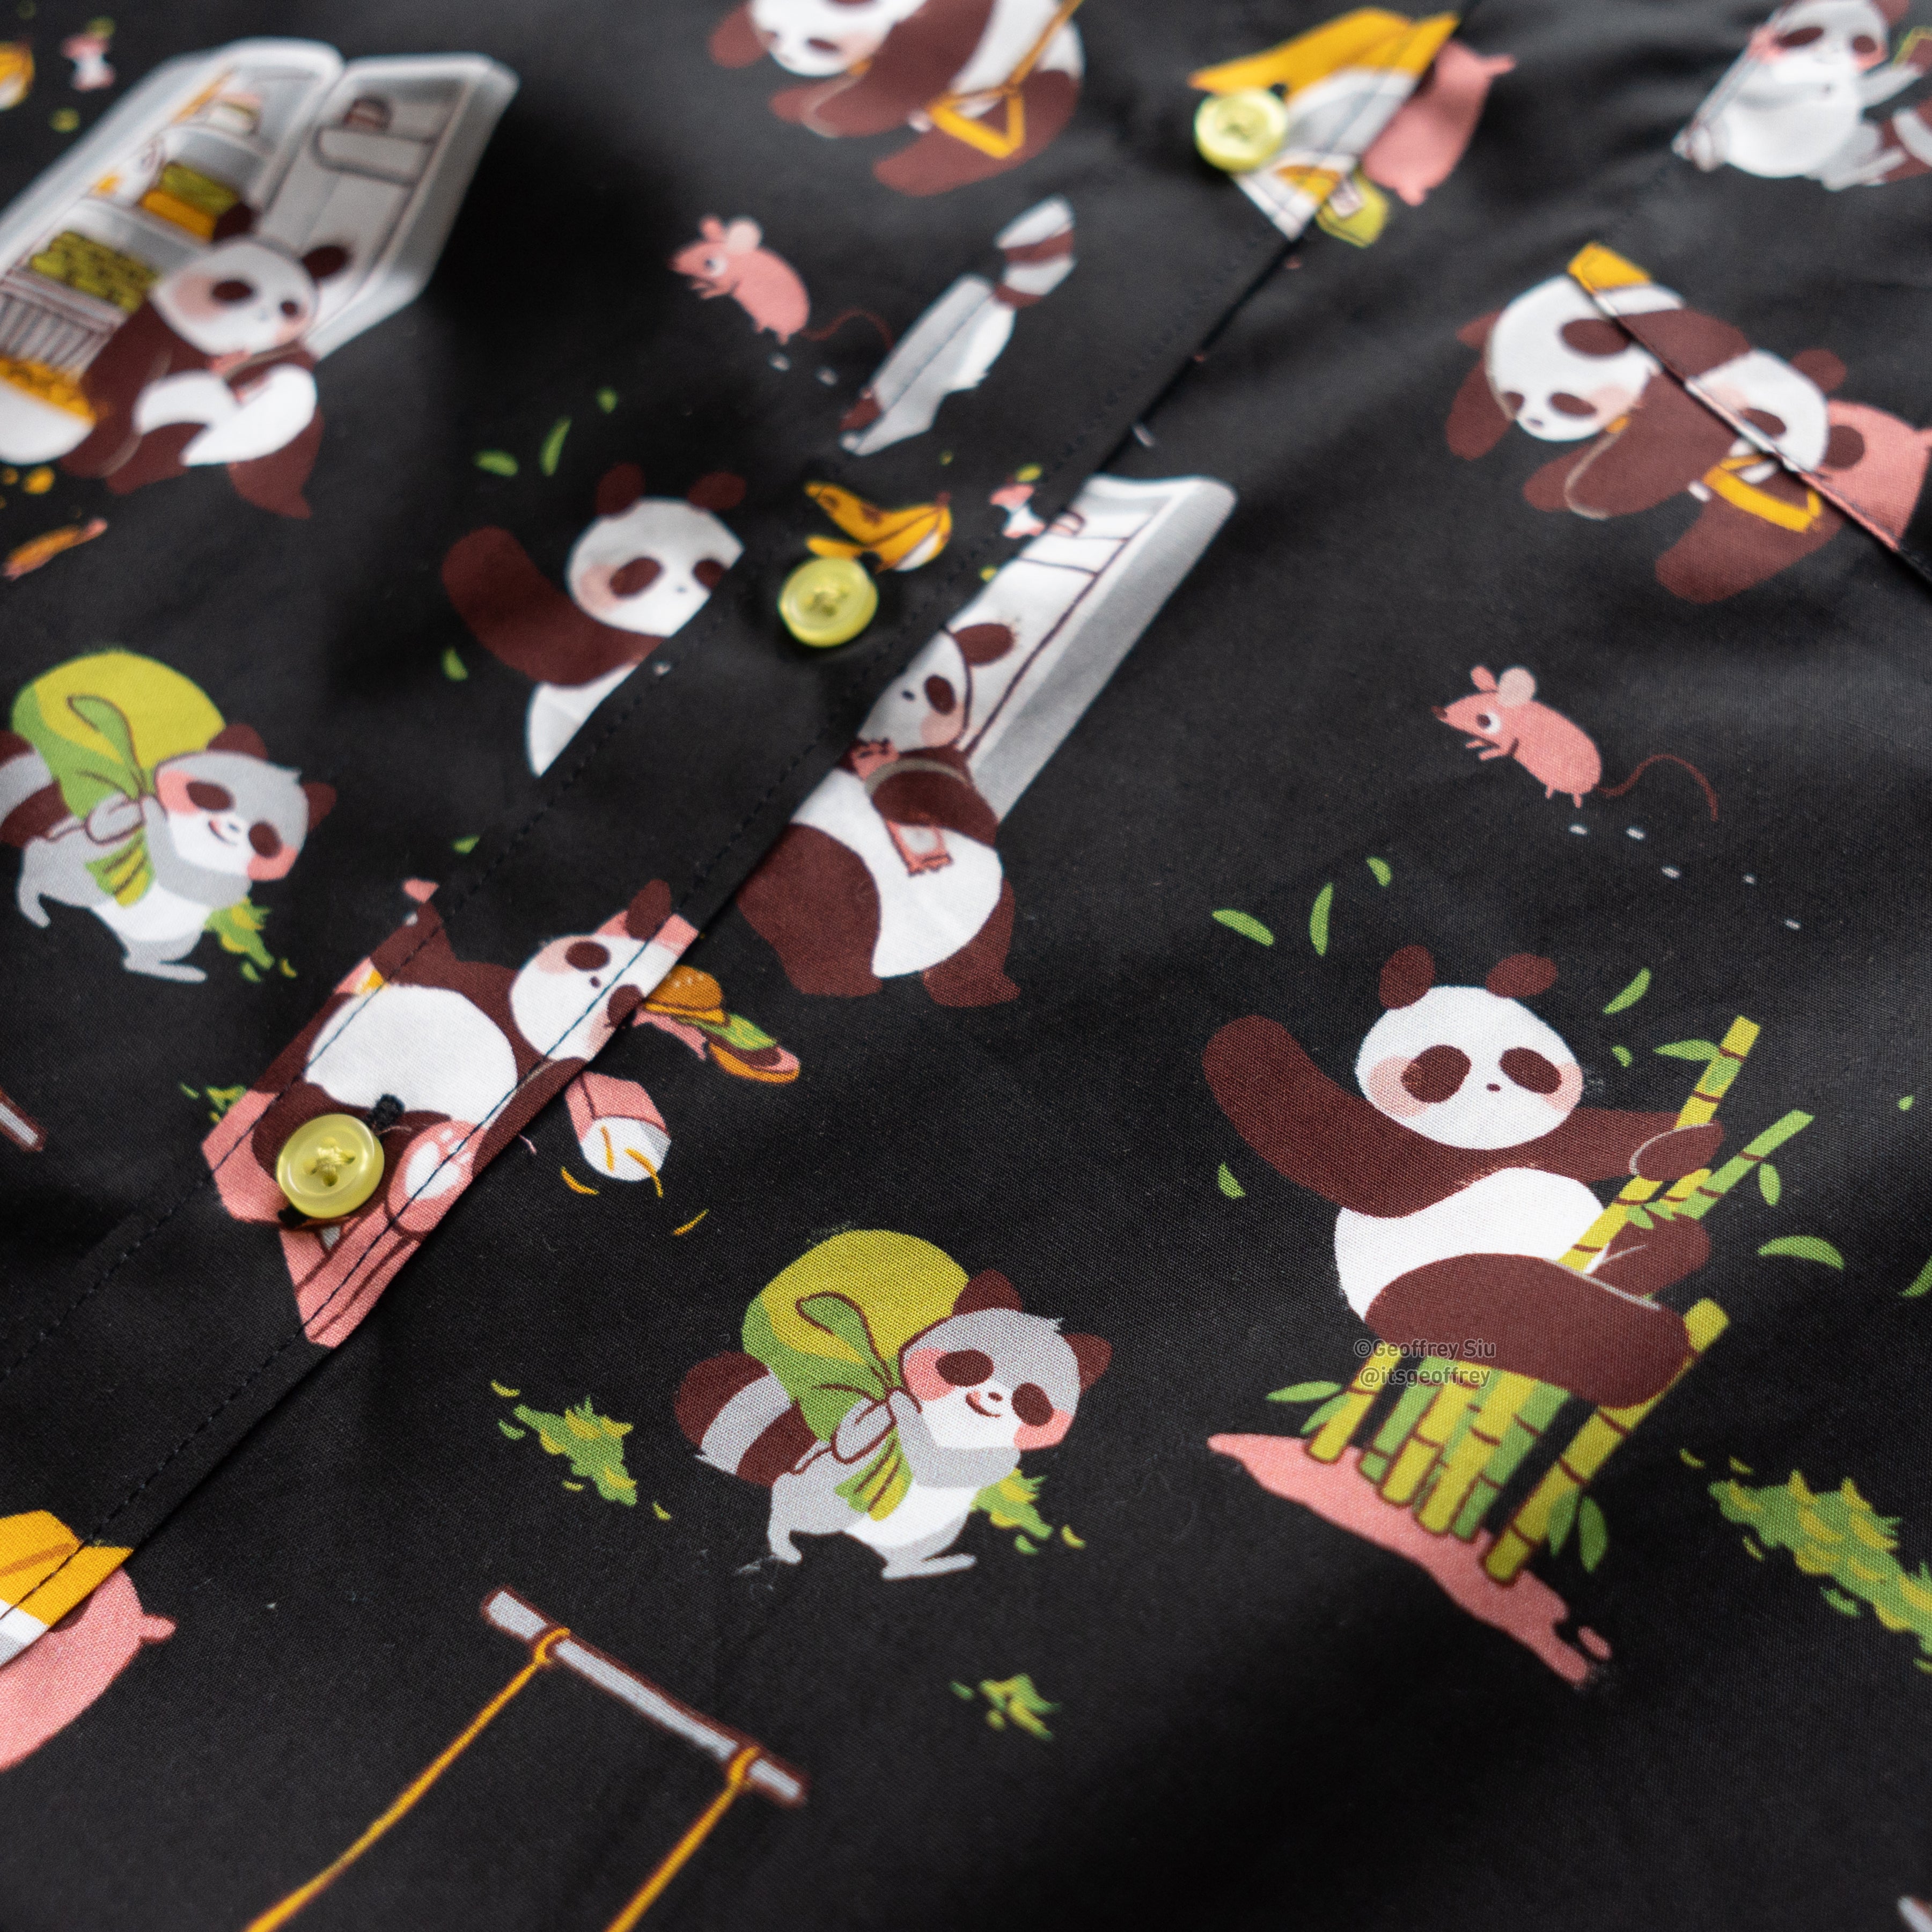 ORIGINAL Trash Panda Button-Up Shirt